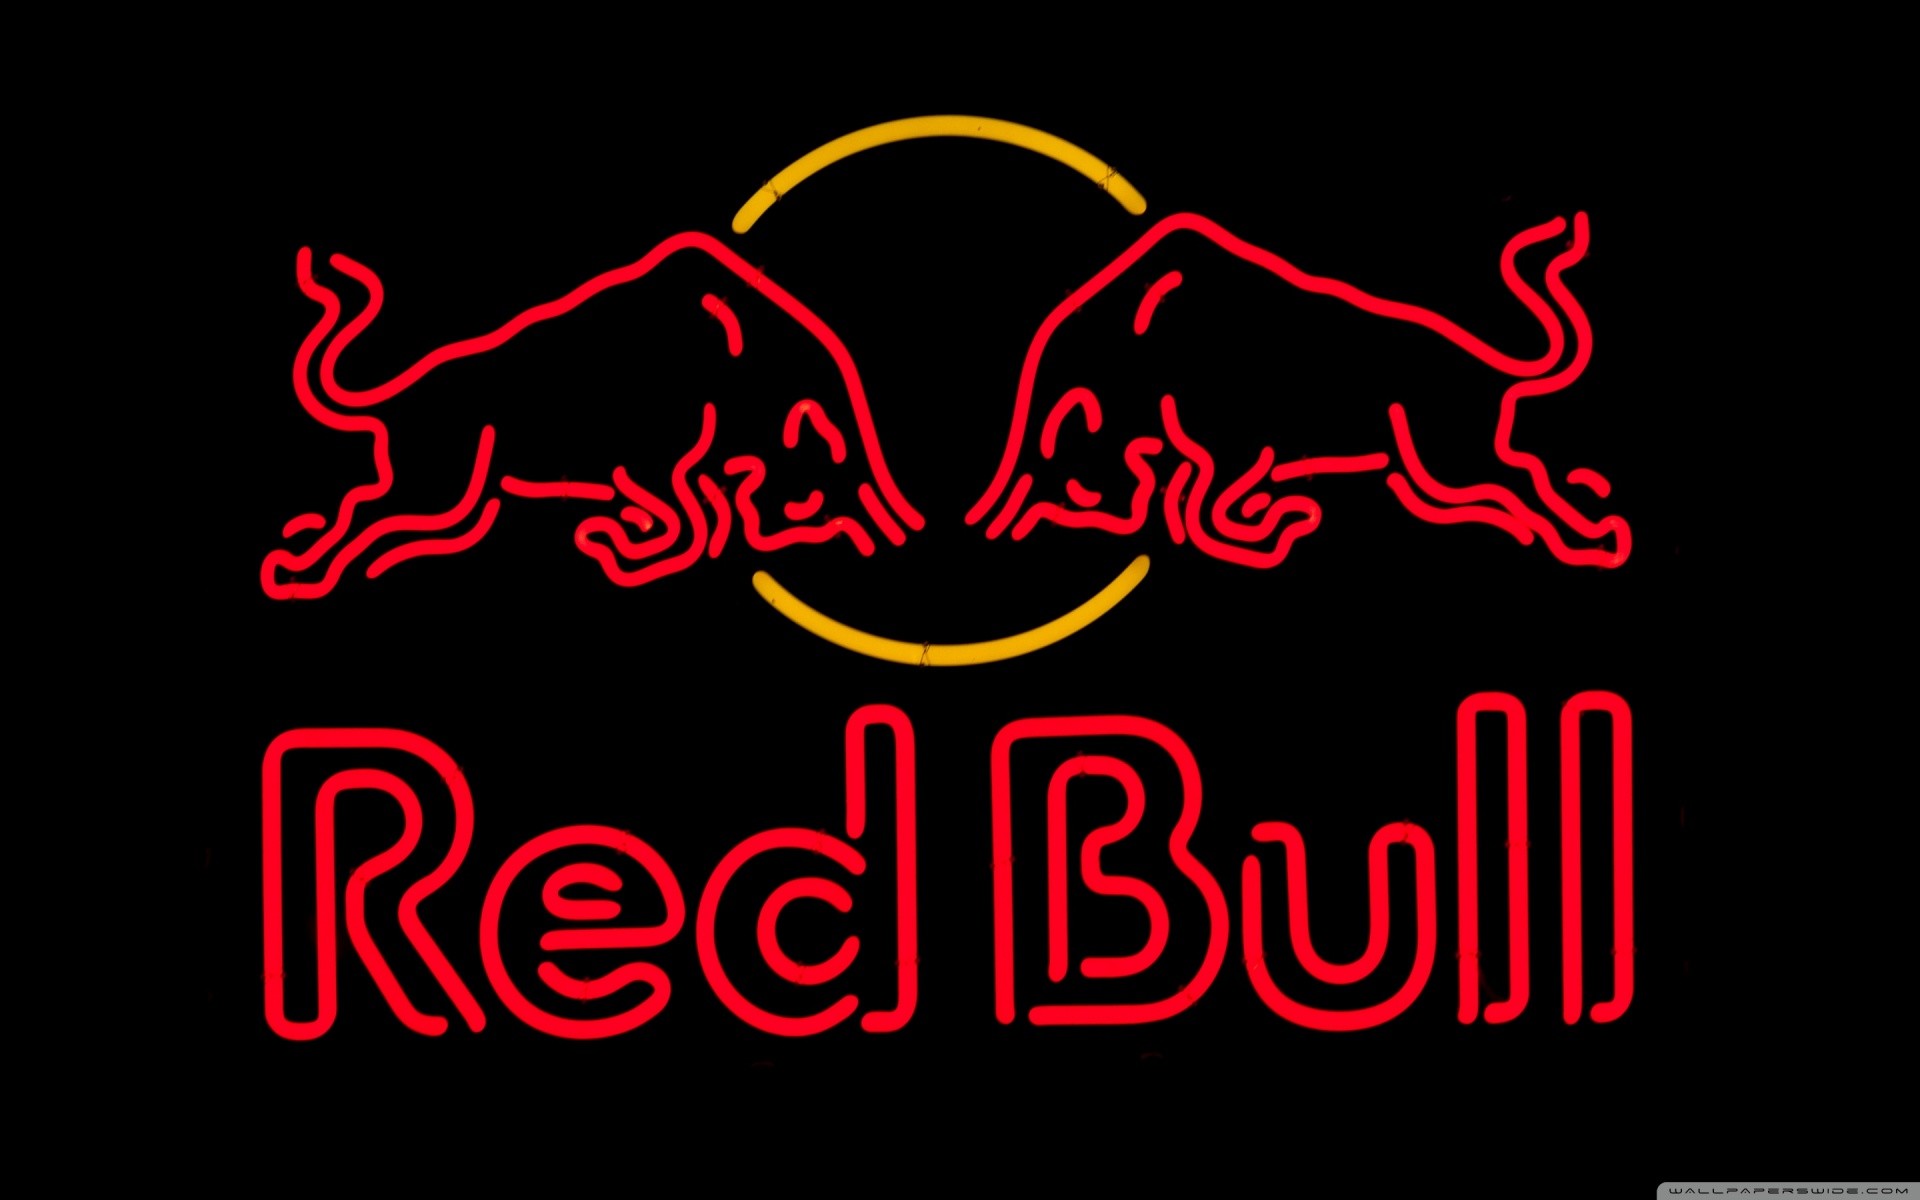 Red Bull Drift Rx8 Wallpaper - Graphic Design , HD Wallpaper & Backgrounds